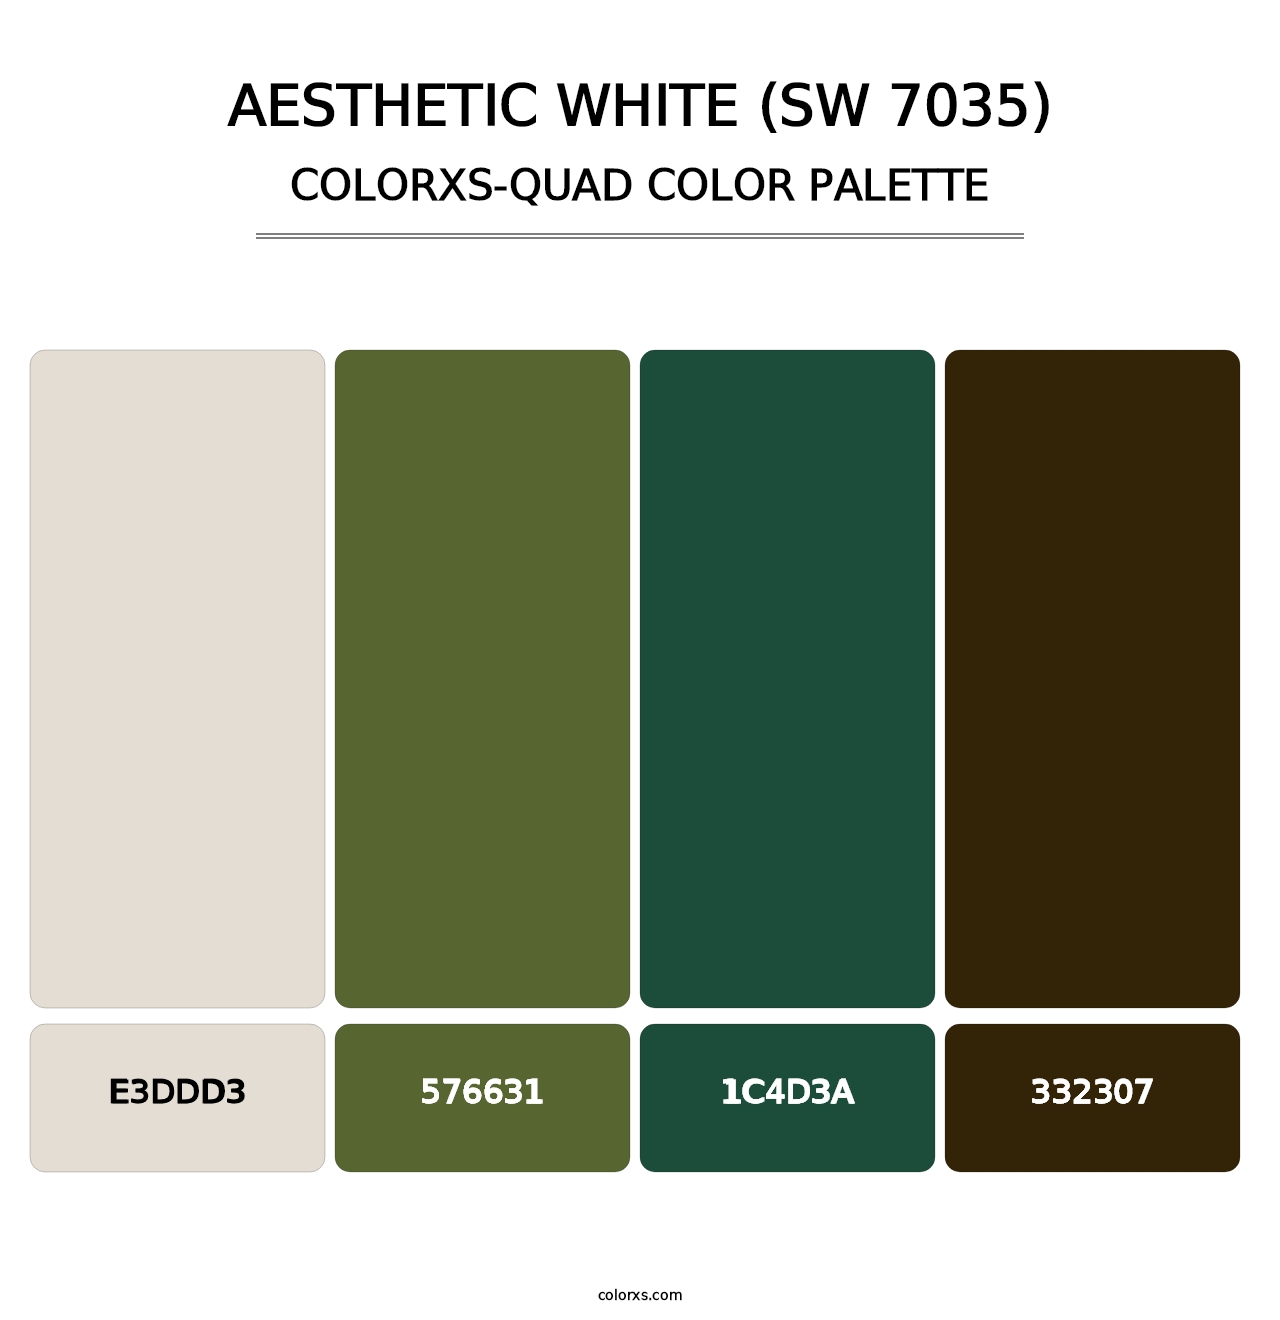 Aesthetic White (SW 7035) - Colorxs Quad Palette